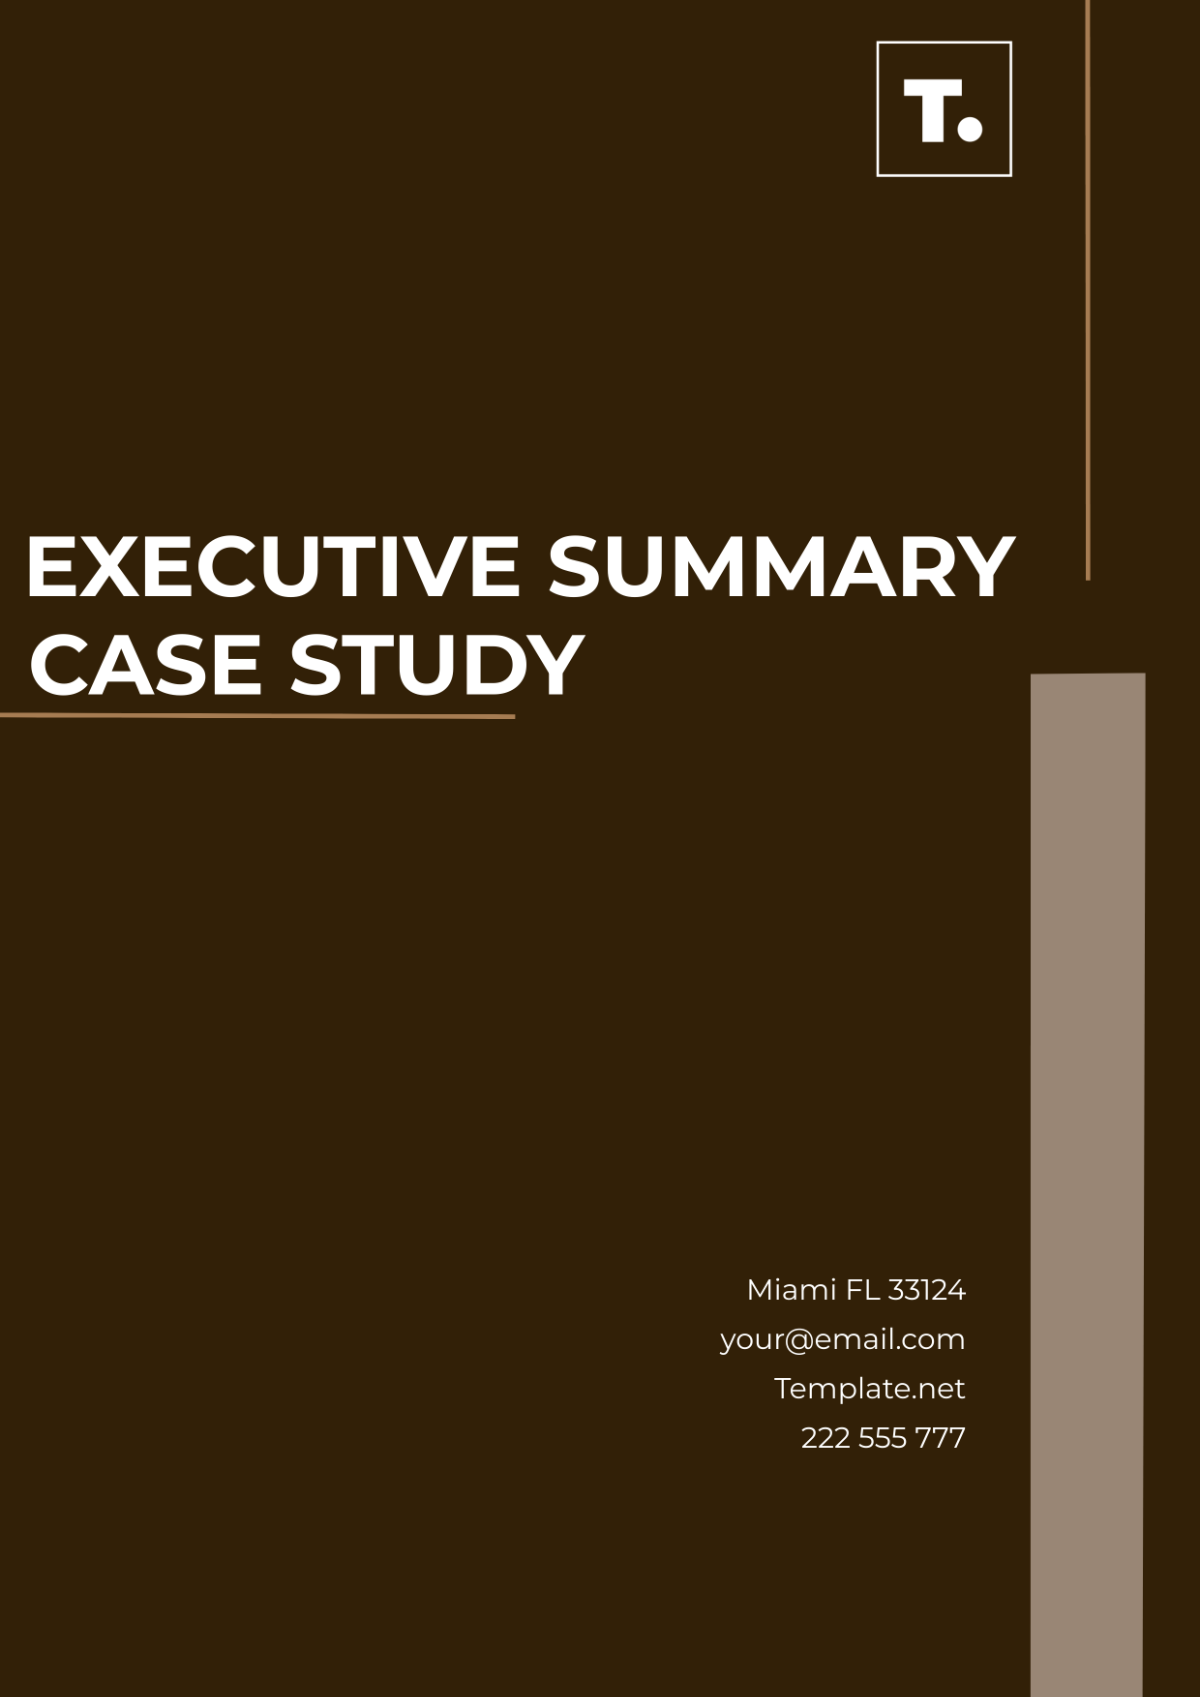 Executive Summary Case Study Template